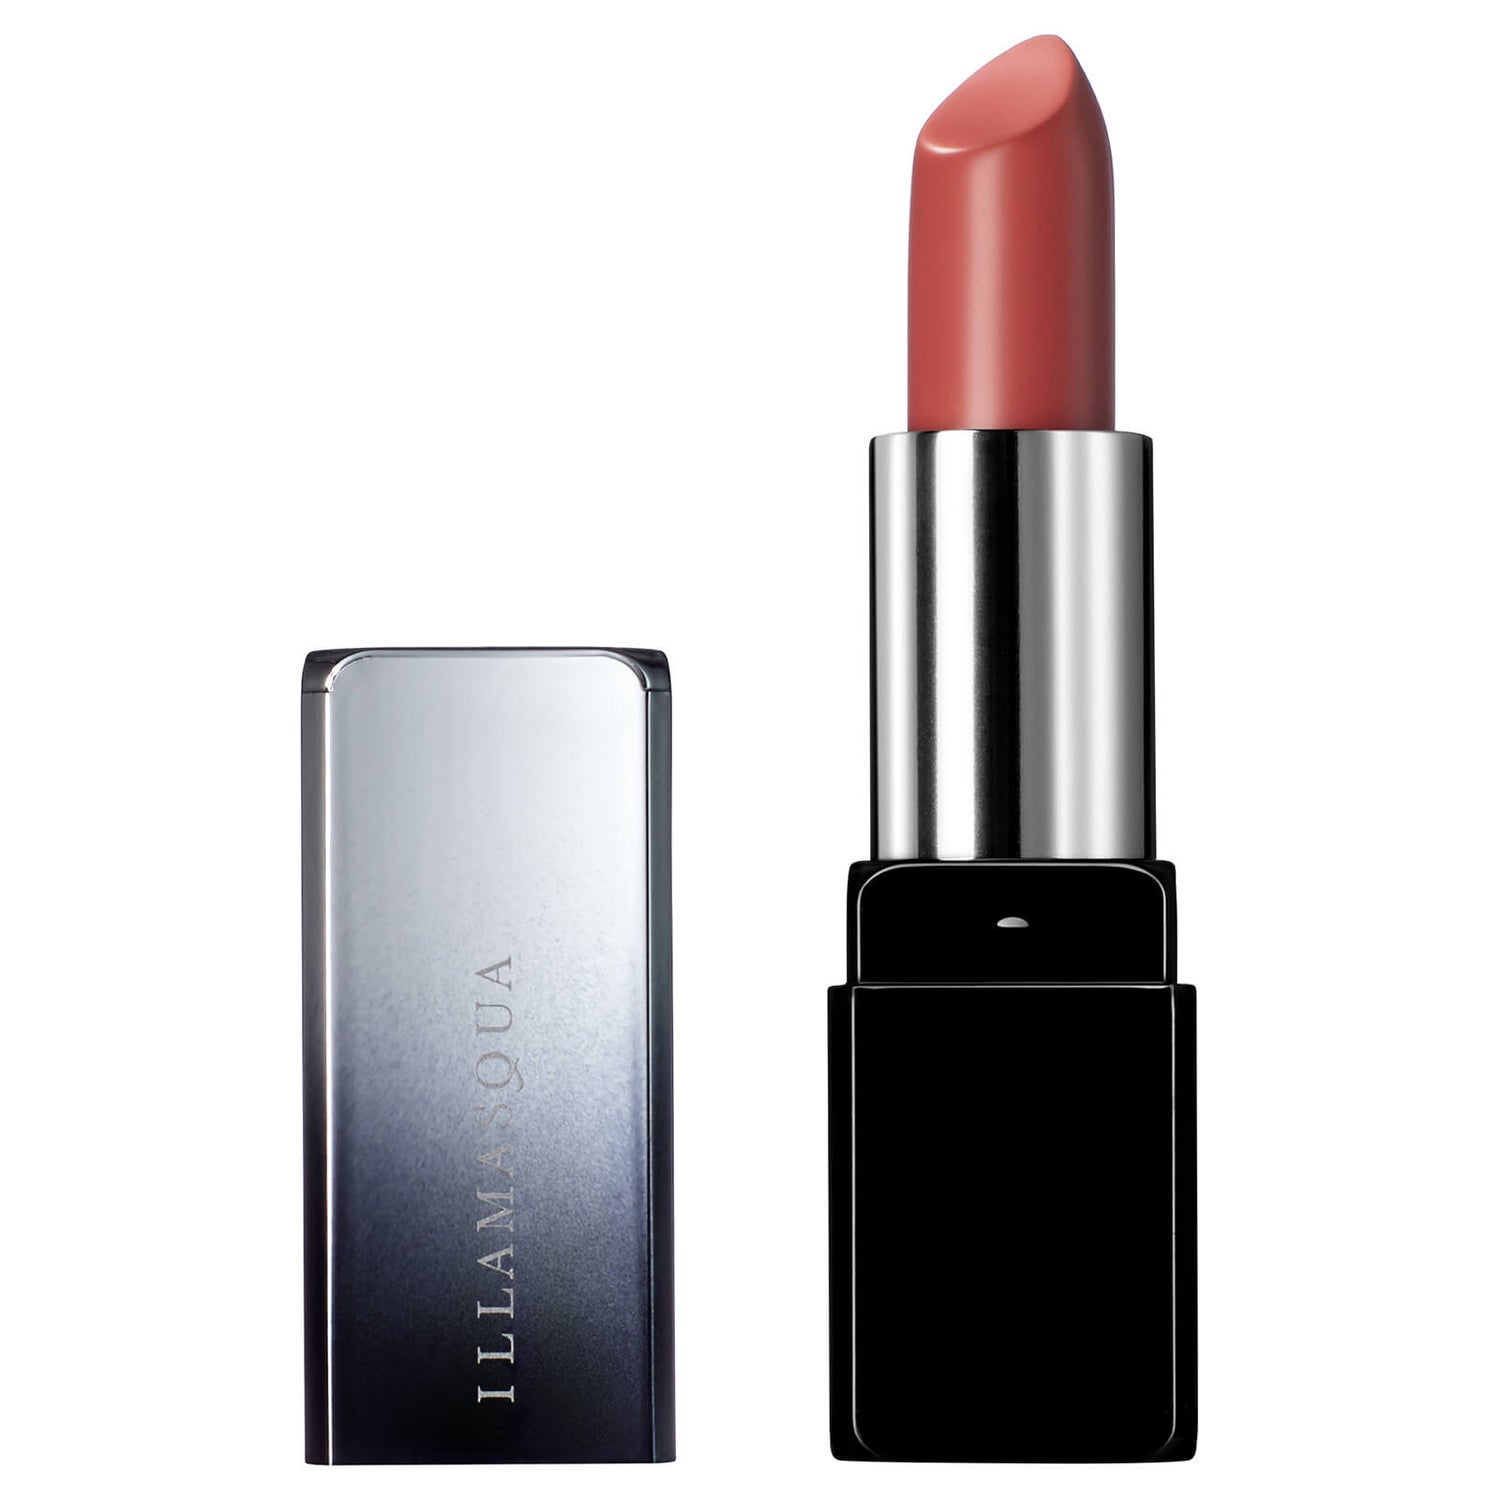 Illamasqua Limited Edition Antimatter Lipstick - Bang - LOOKFANTASTIC